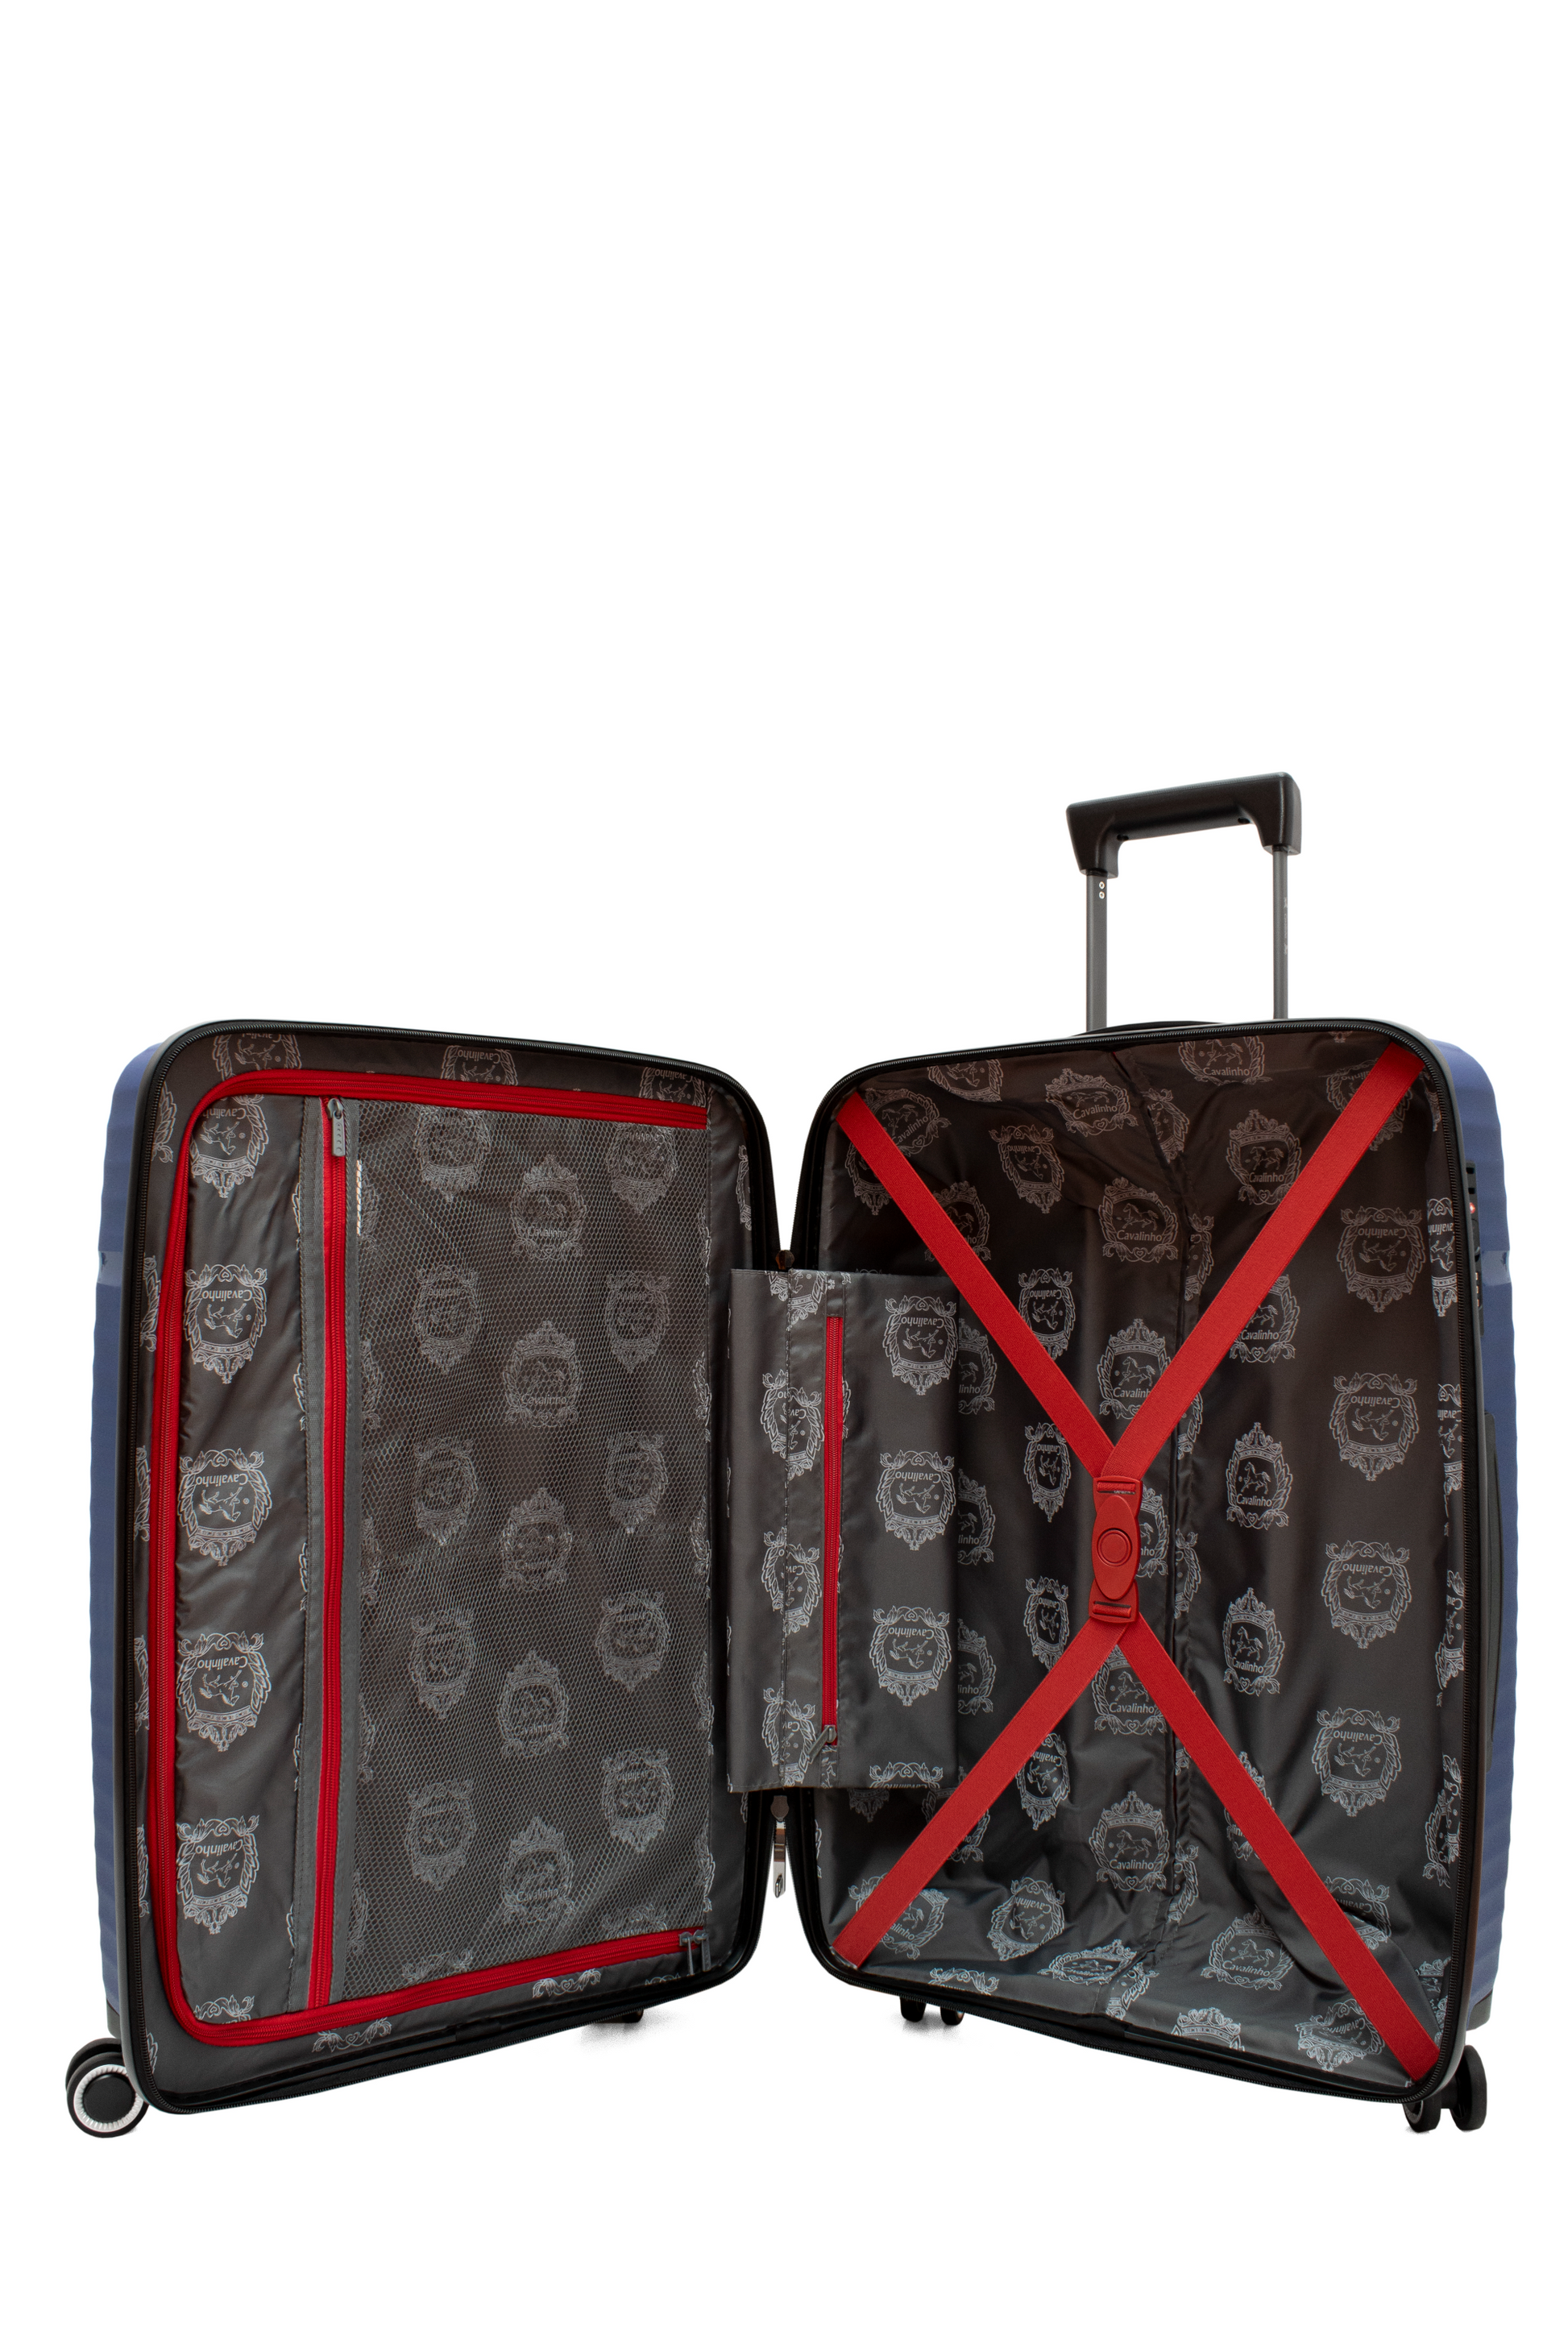 Cavalinho 2 Piece Hardside Luggage Set (14" & 28") - 14 inch & 28 inch Set SteelBlue - 68010003.03.24_4S_9622177a-0637-437d-b560-a81677be7968